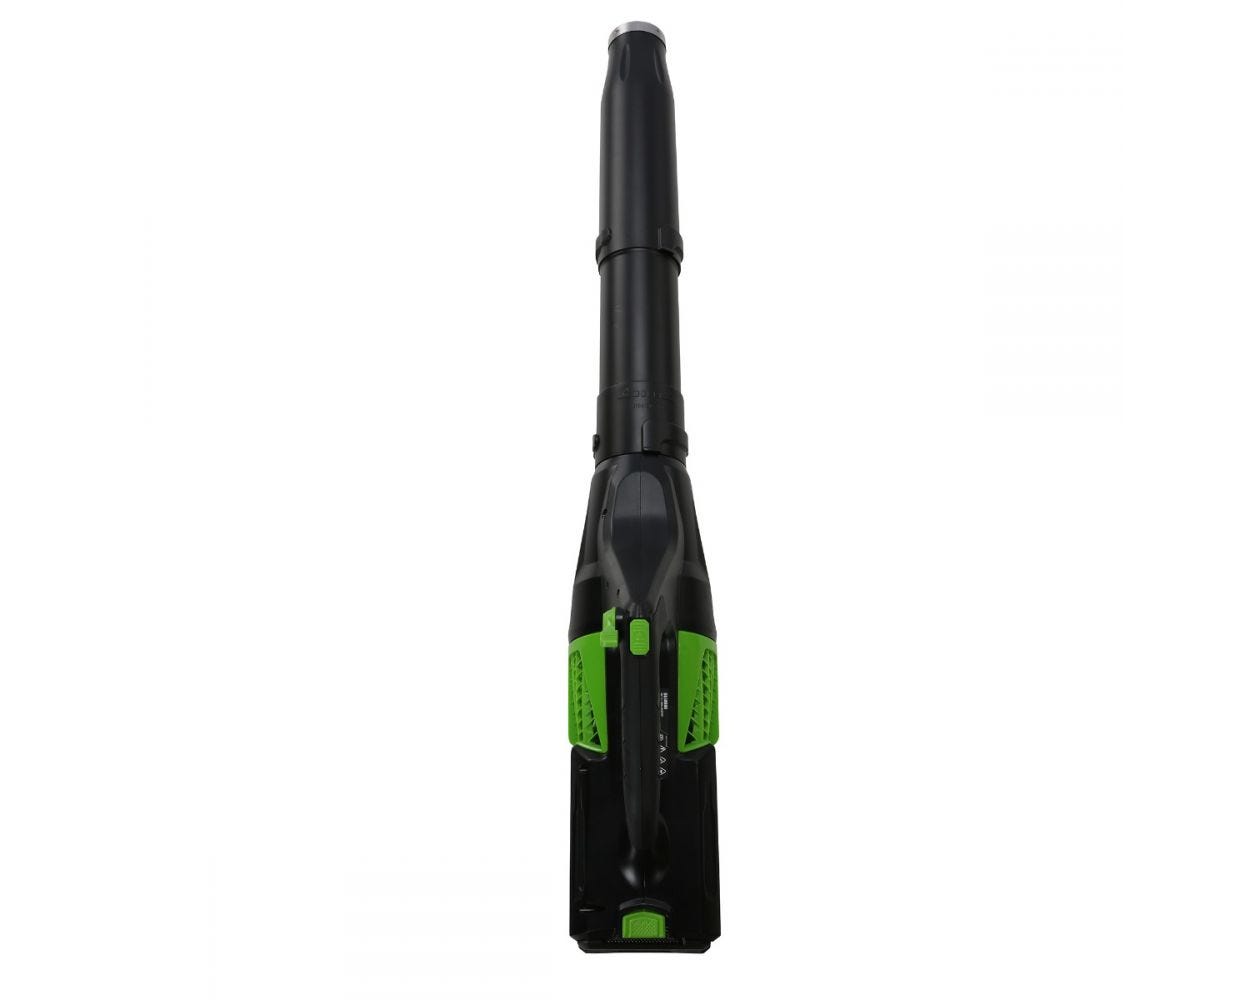 BLACK+DECKER 450-CFM 140-MPH Corded Electric Handheld Leaf Blower